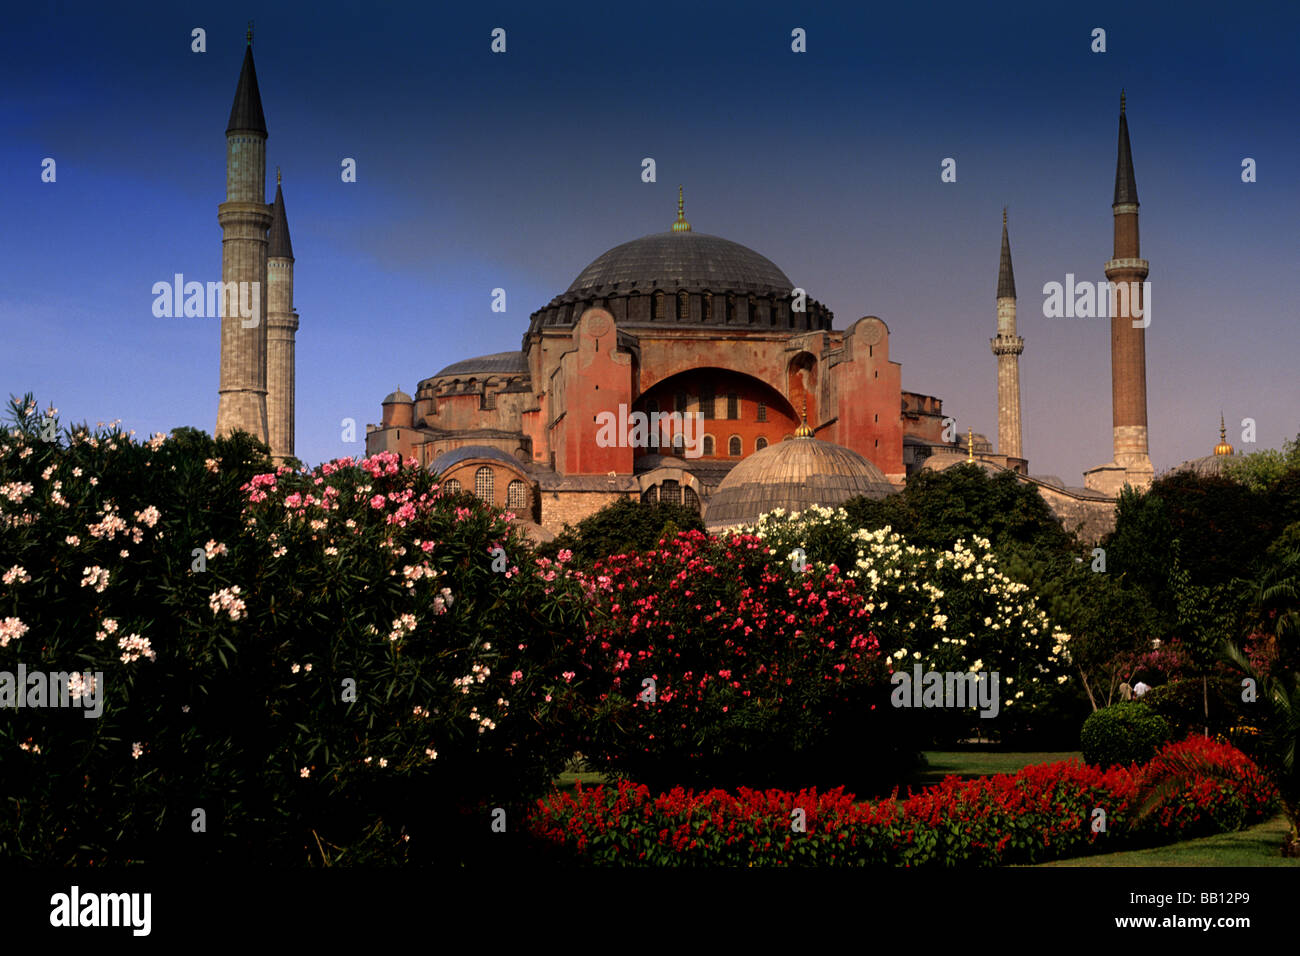 Beautiful Saint Sophia Church Hagai Sophia Built in 1453 in Istanbul Turkey Stock Photo